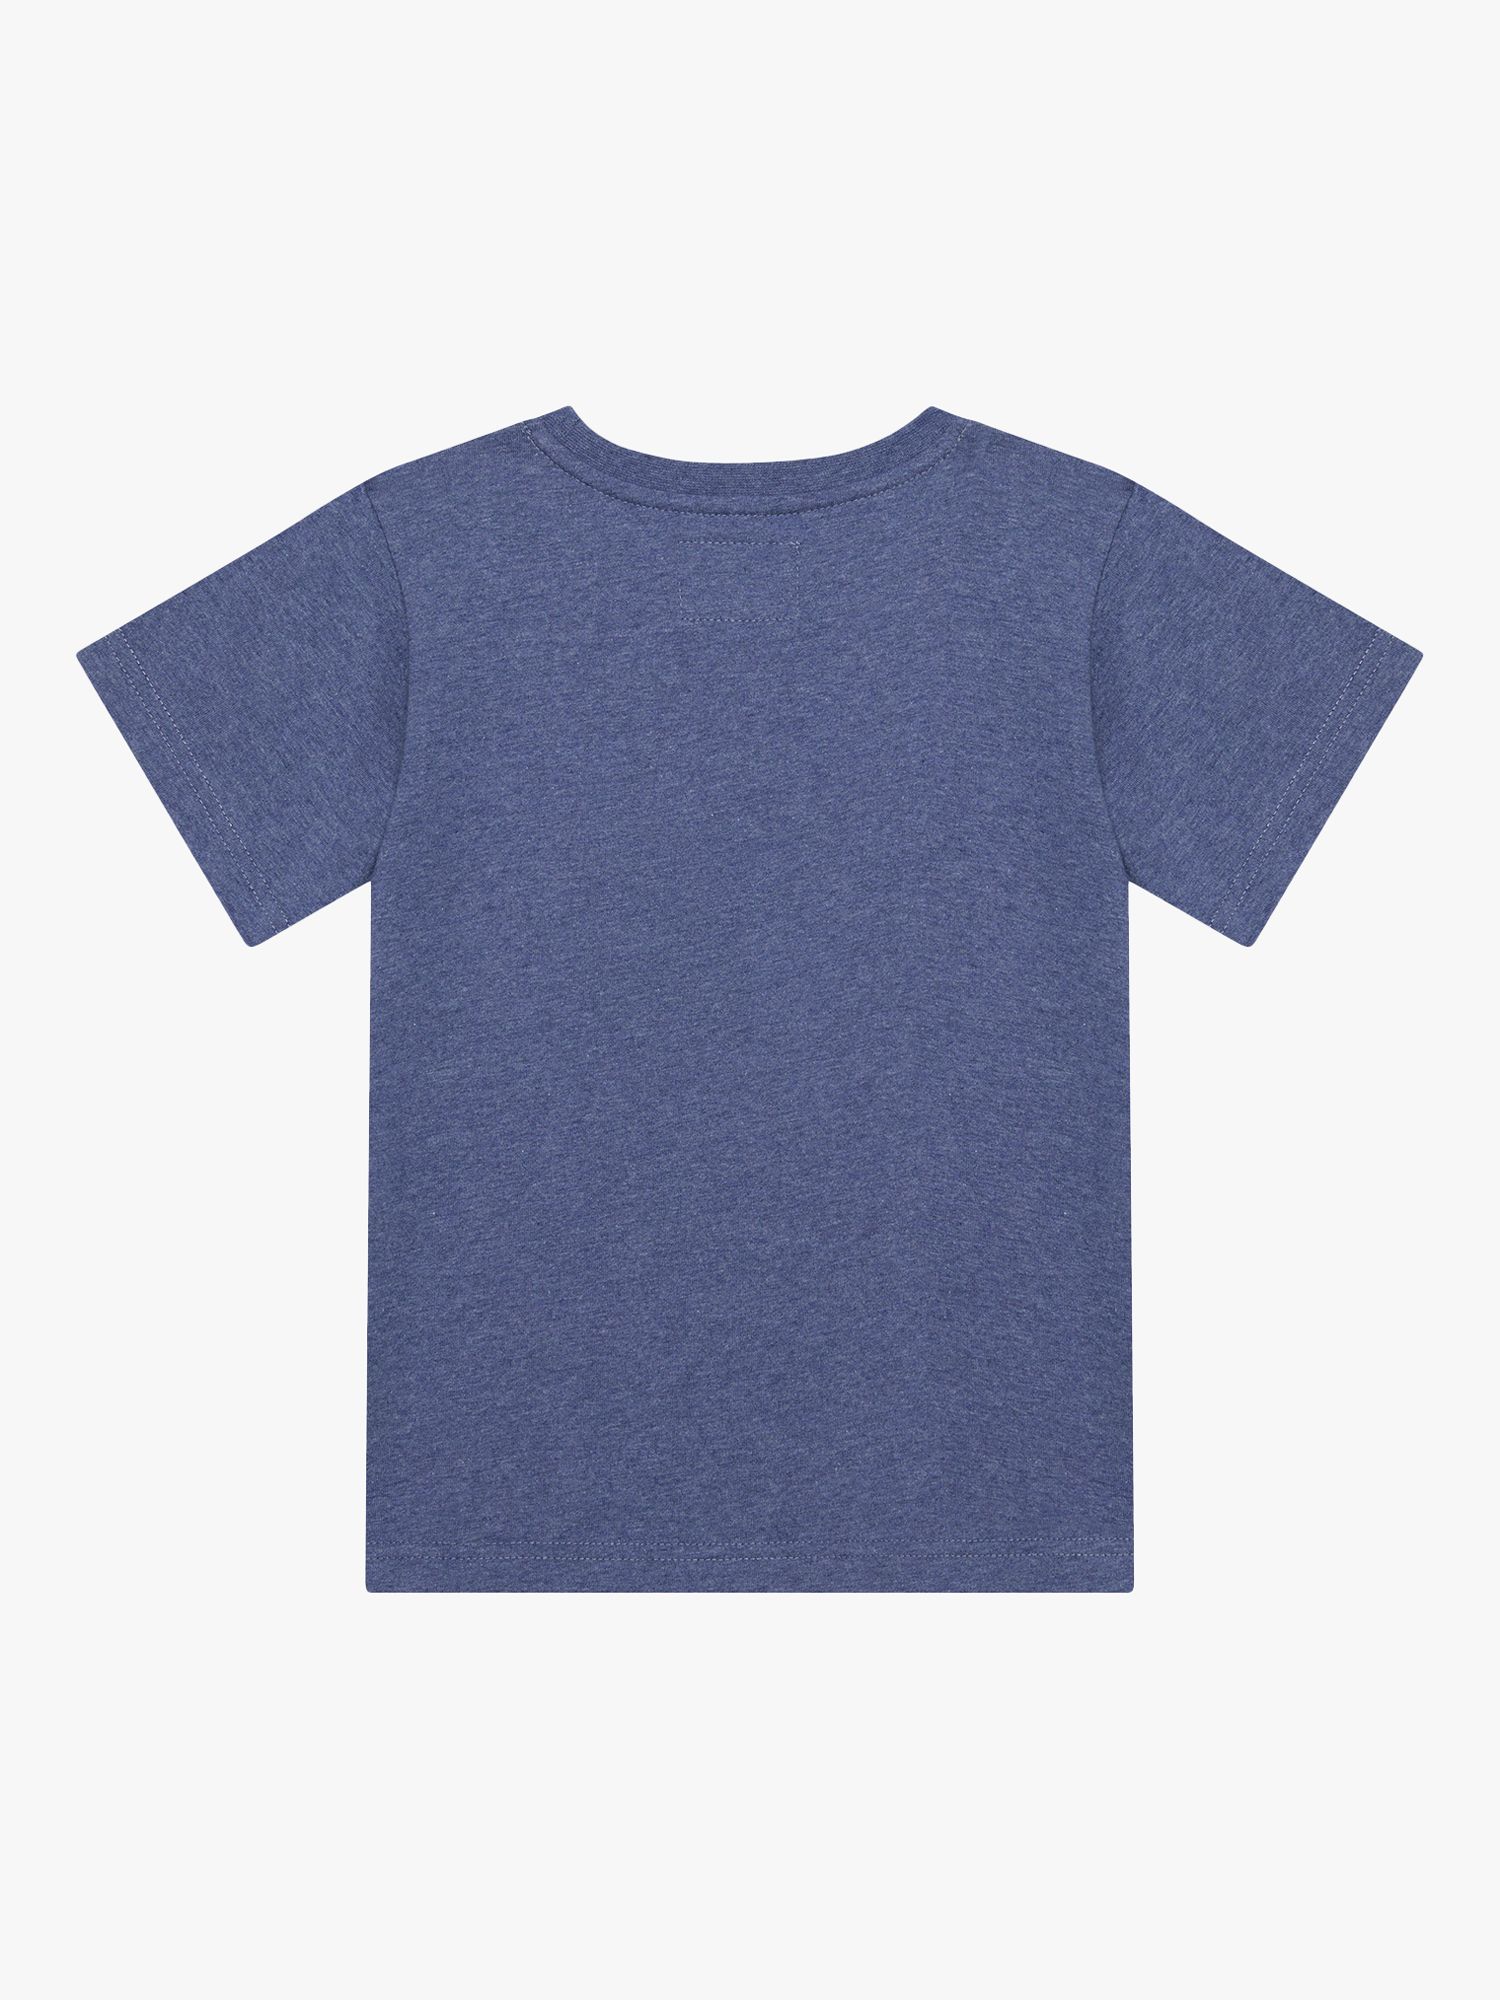 Buy Trotters Kids' Sebastian Car T-Shirt, Denim Blue Marl Online at johnlewis.com